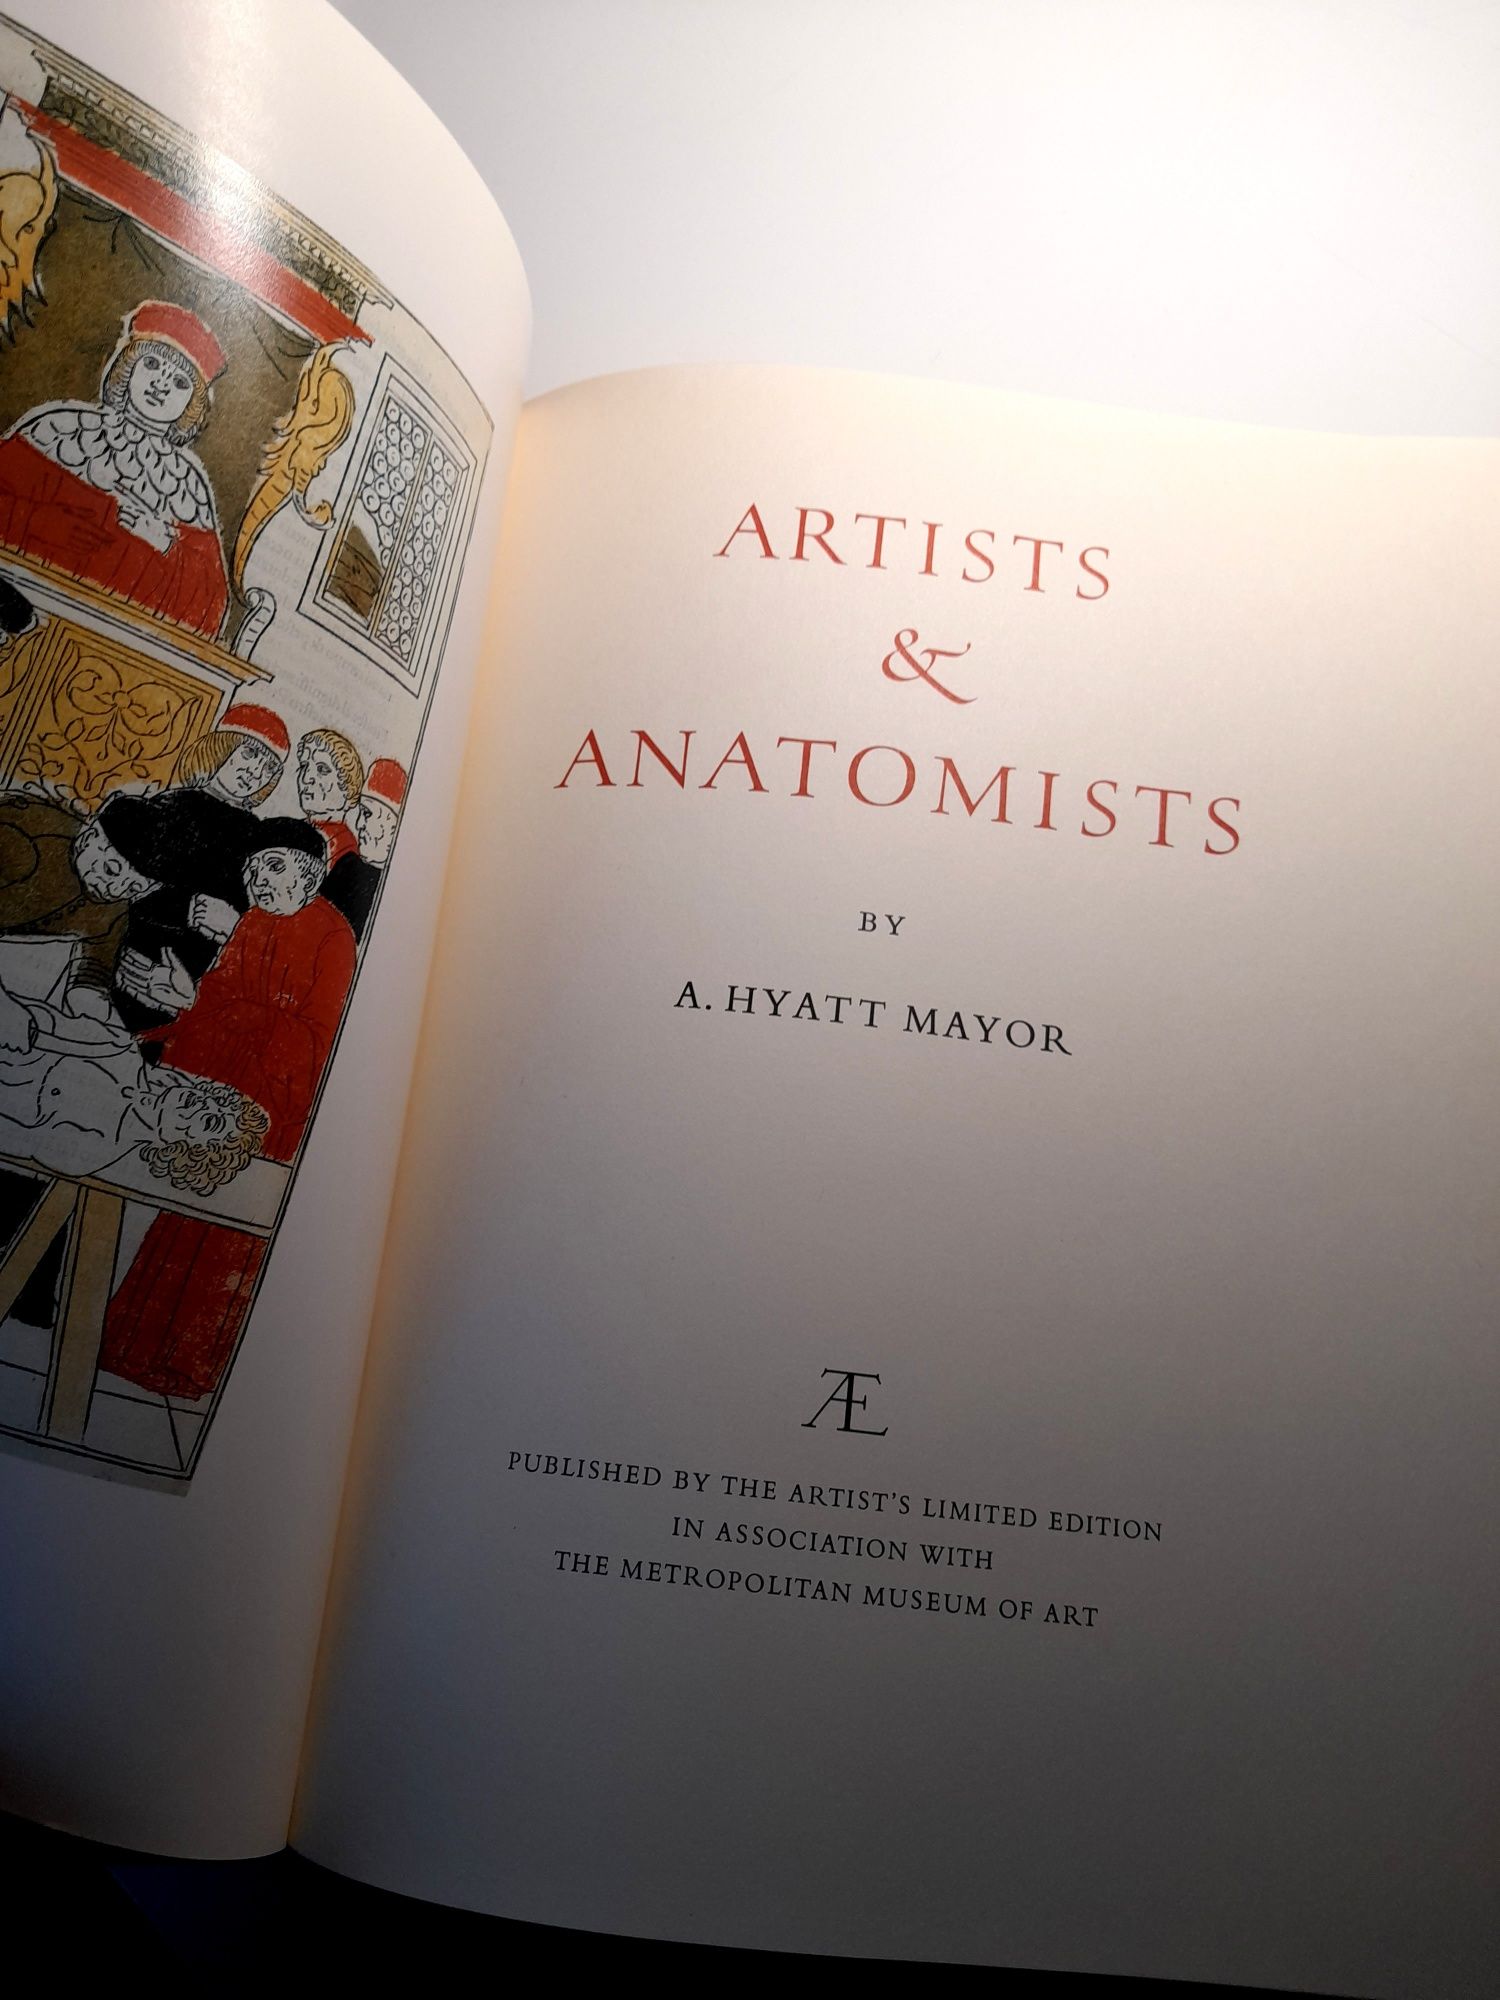 Artists & Anatomists by A. Hyatt Mayor